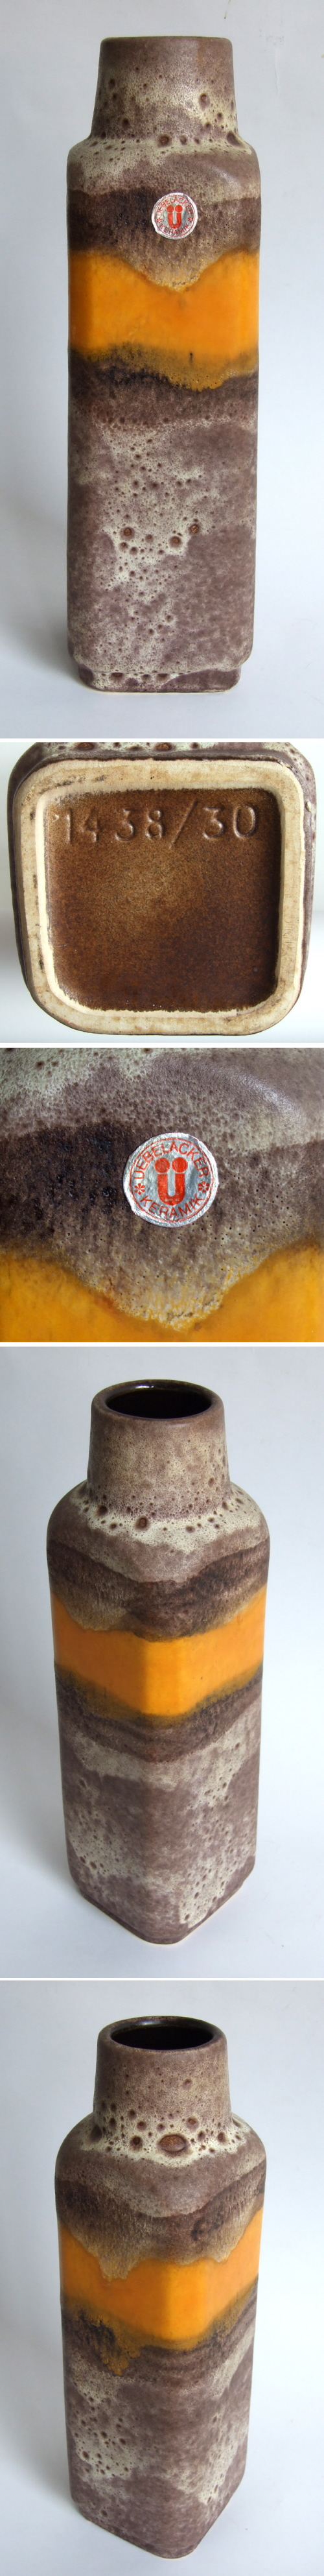 ü-keramik 1438-30  700coll